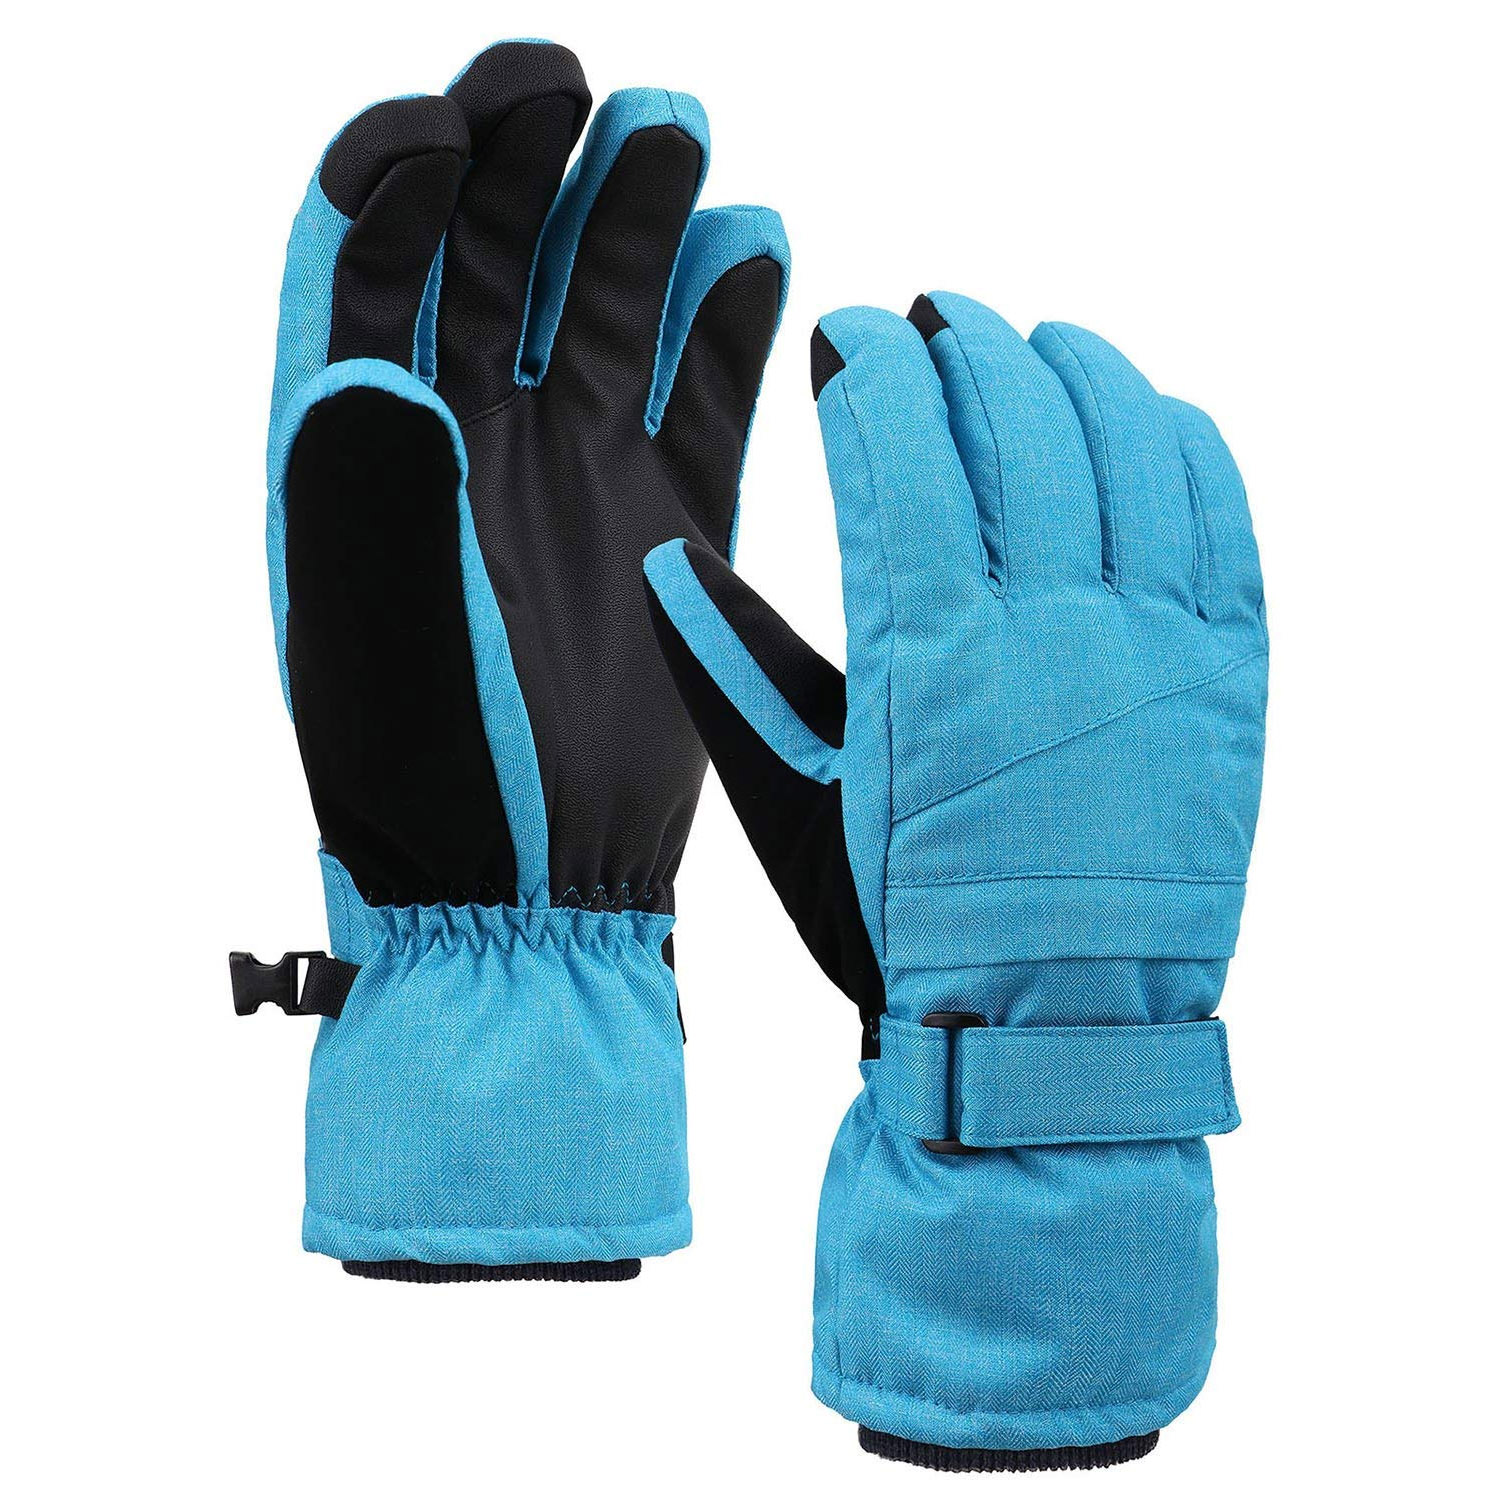 Women's thinsulate Insulated Waterproof Zipper Pocket Snow Gloves pink blue white